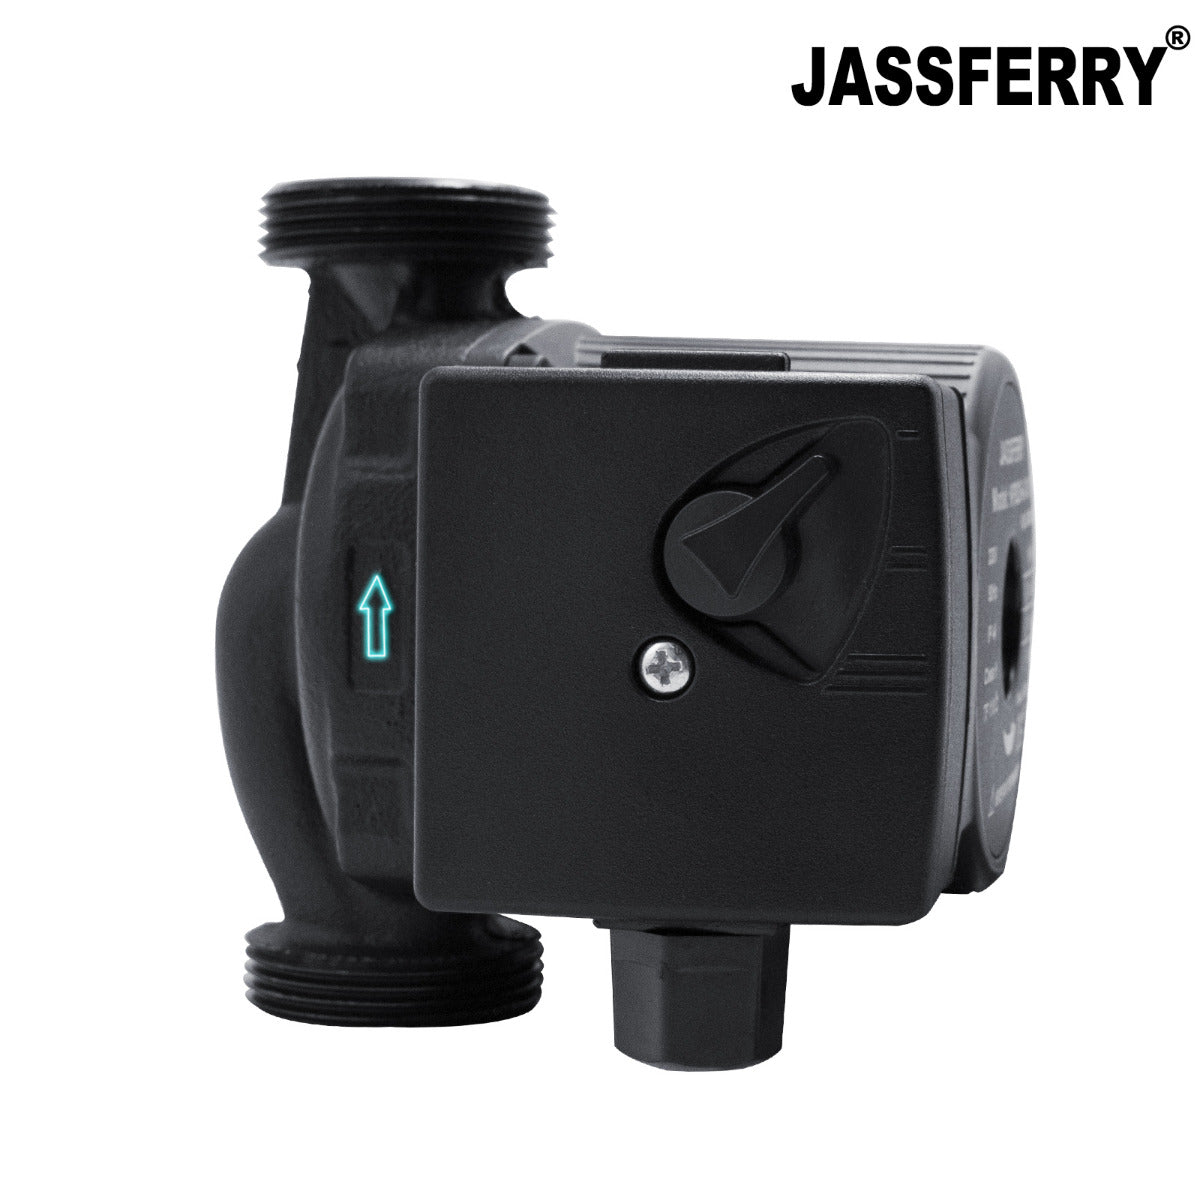 JassferryJASSFERRY Central Heating Pump Hot Water Circulation Pump 3 Speed SwitchHeating Pumps